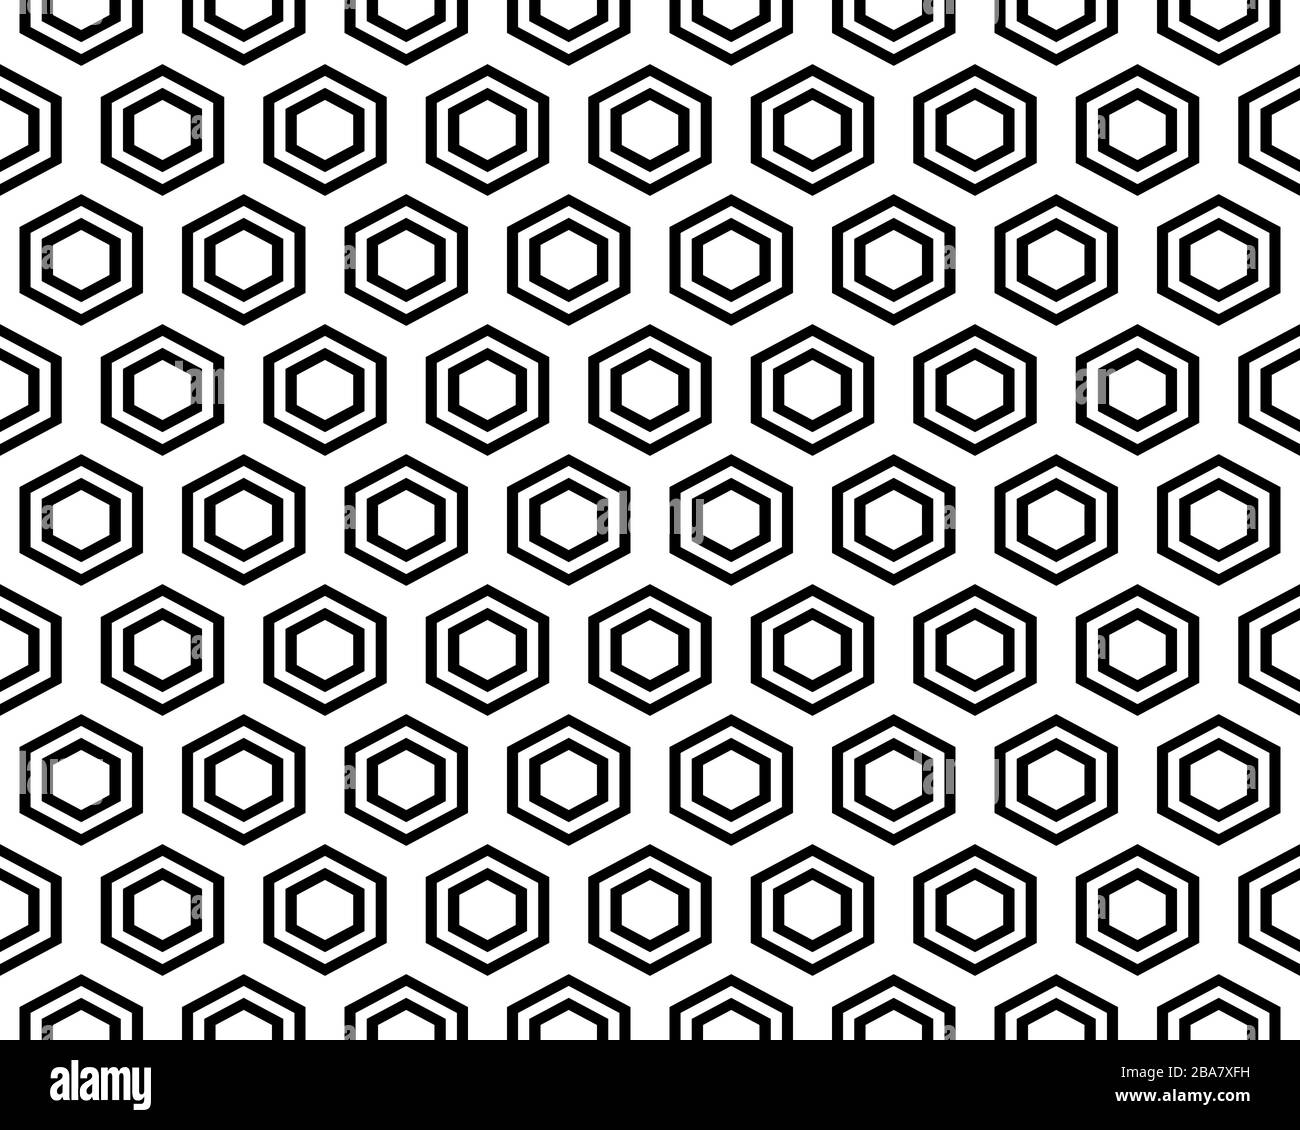 Seamless hexagon pattern background, creative design templates Stock Photo